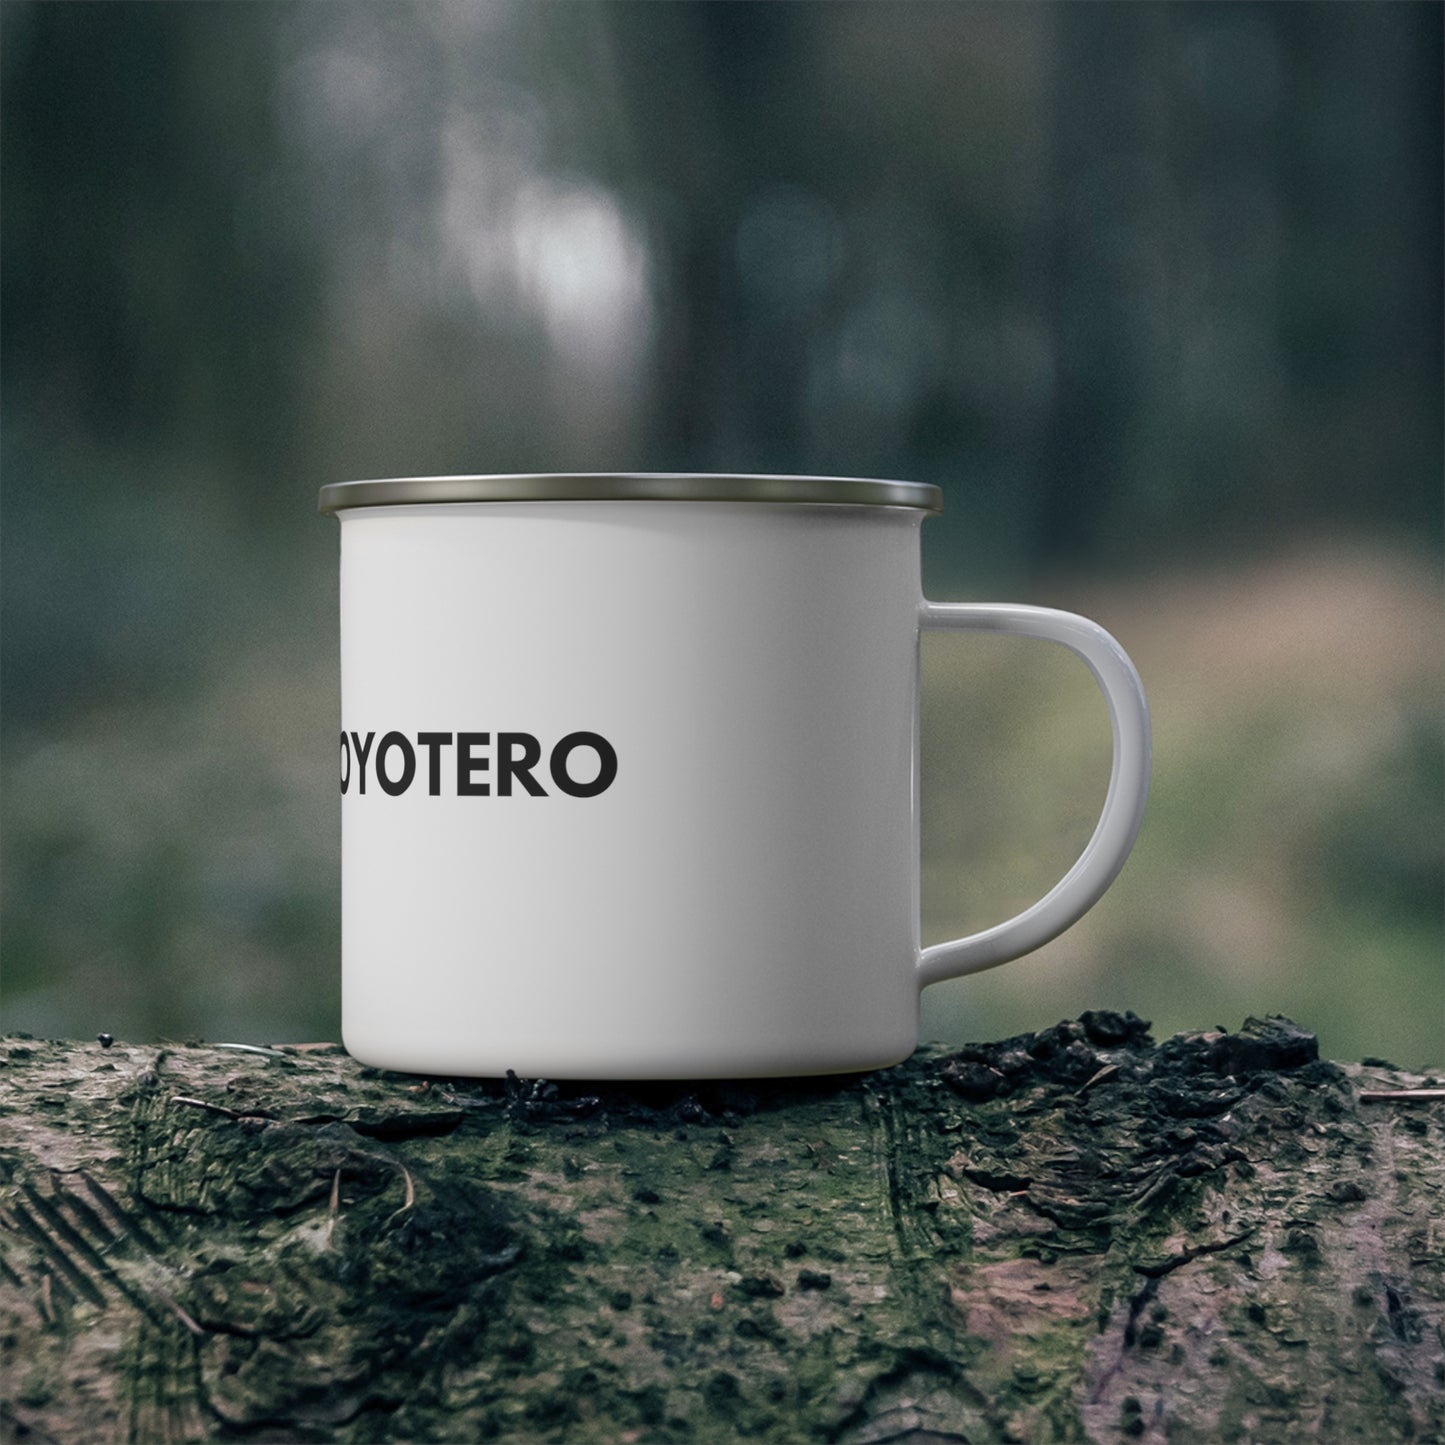 Toyotero Camping Mug 1